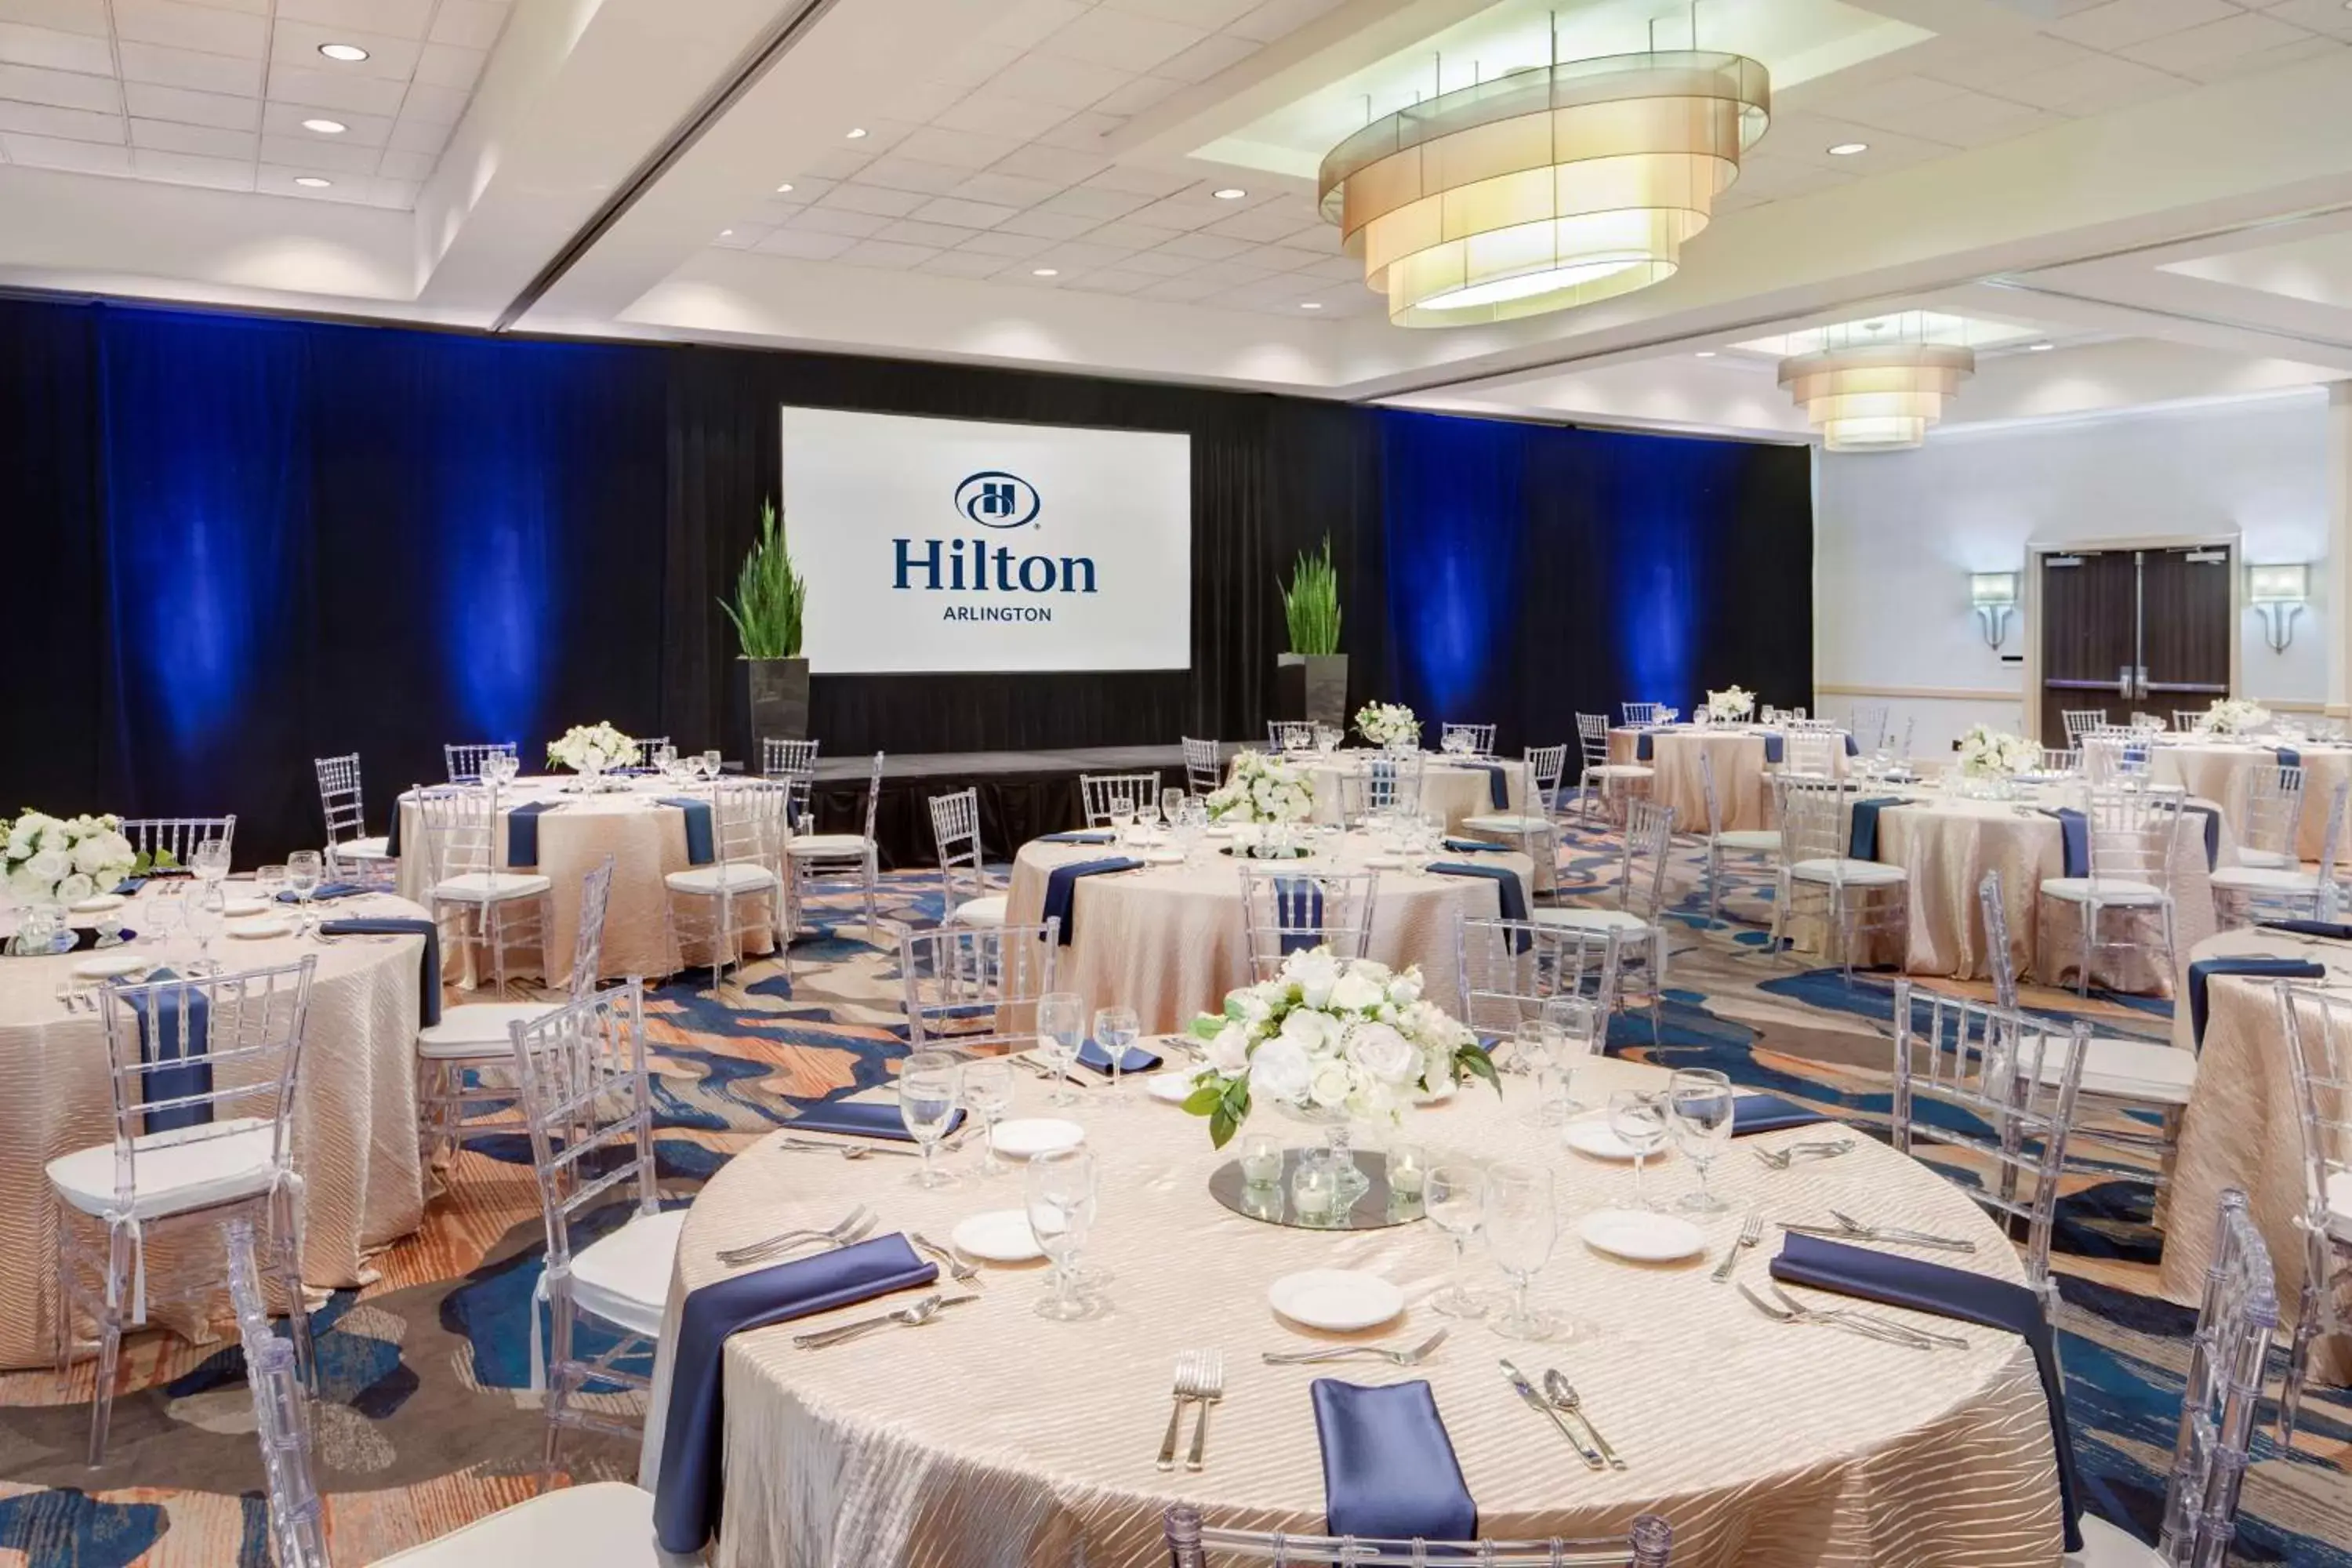 Meeting/conference room, Banquet Facilities in Hilton Arlington